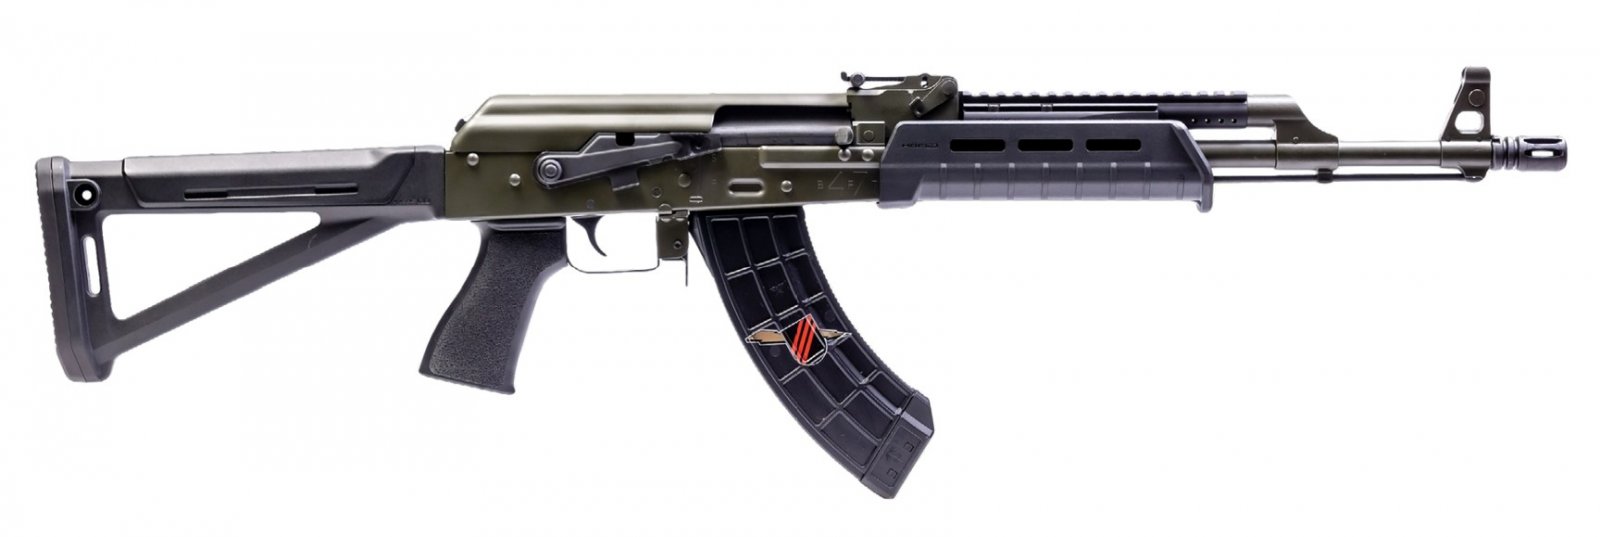 Century Arms Thunder Ranch AK47 V2 Limited Edition.jpg